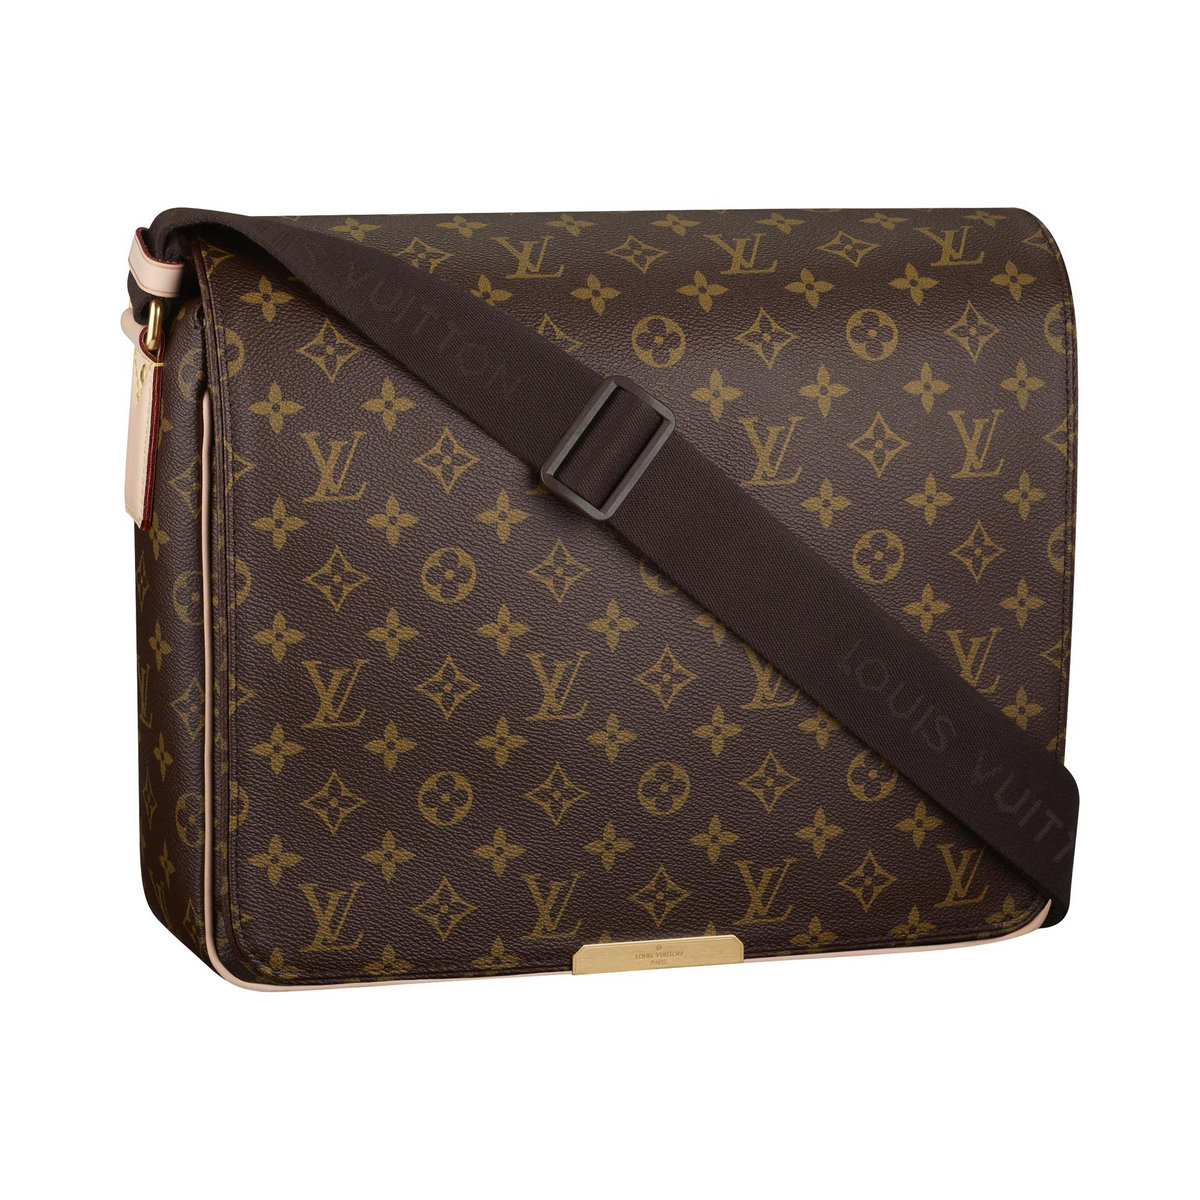 LV wallet for ladies, LV purses